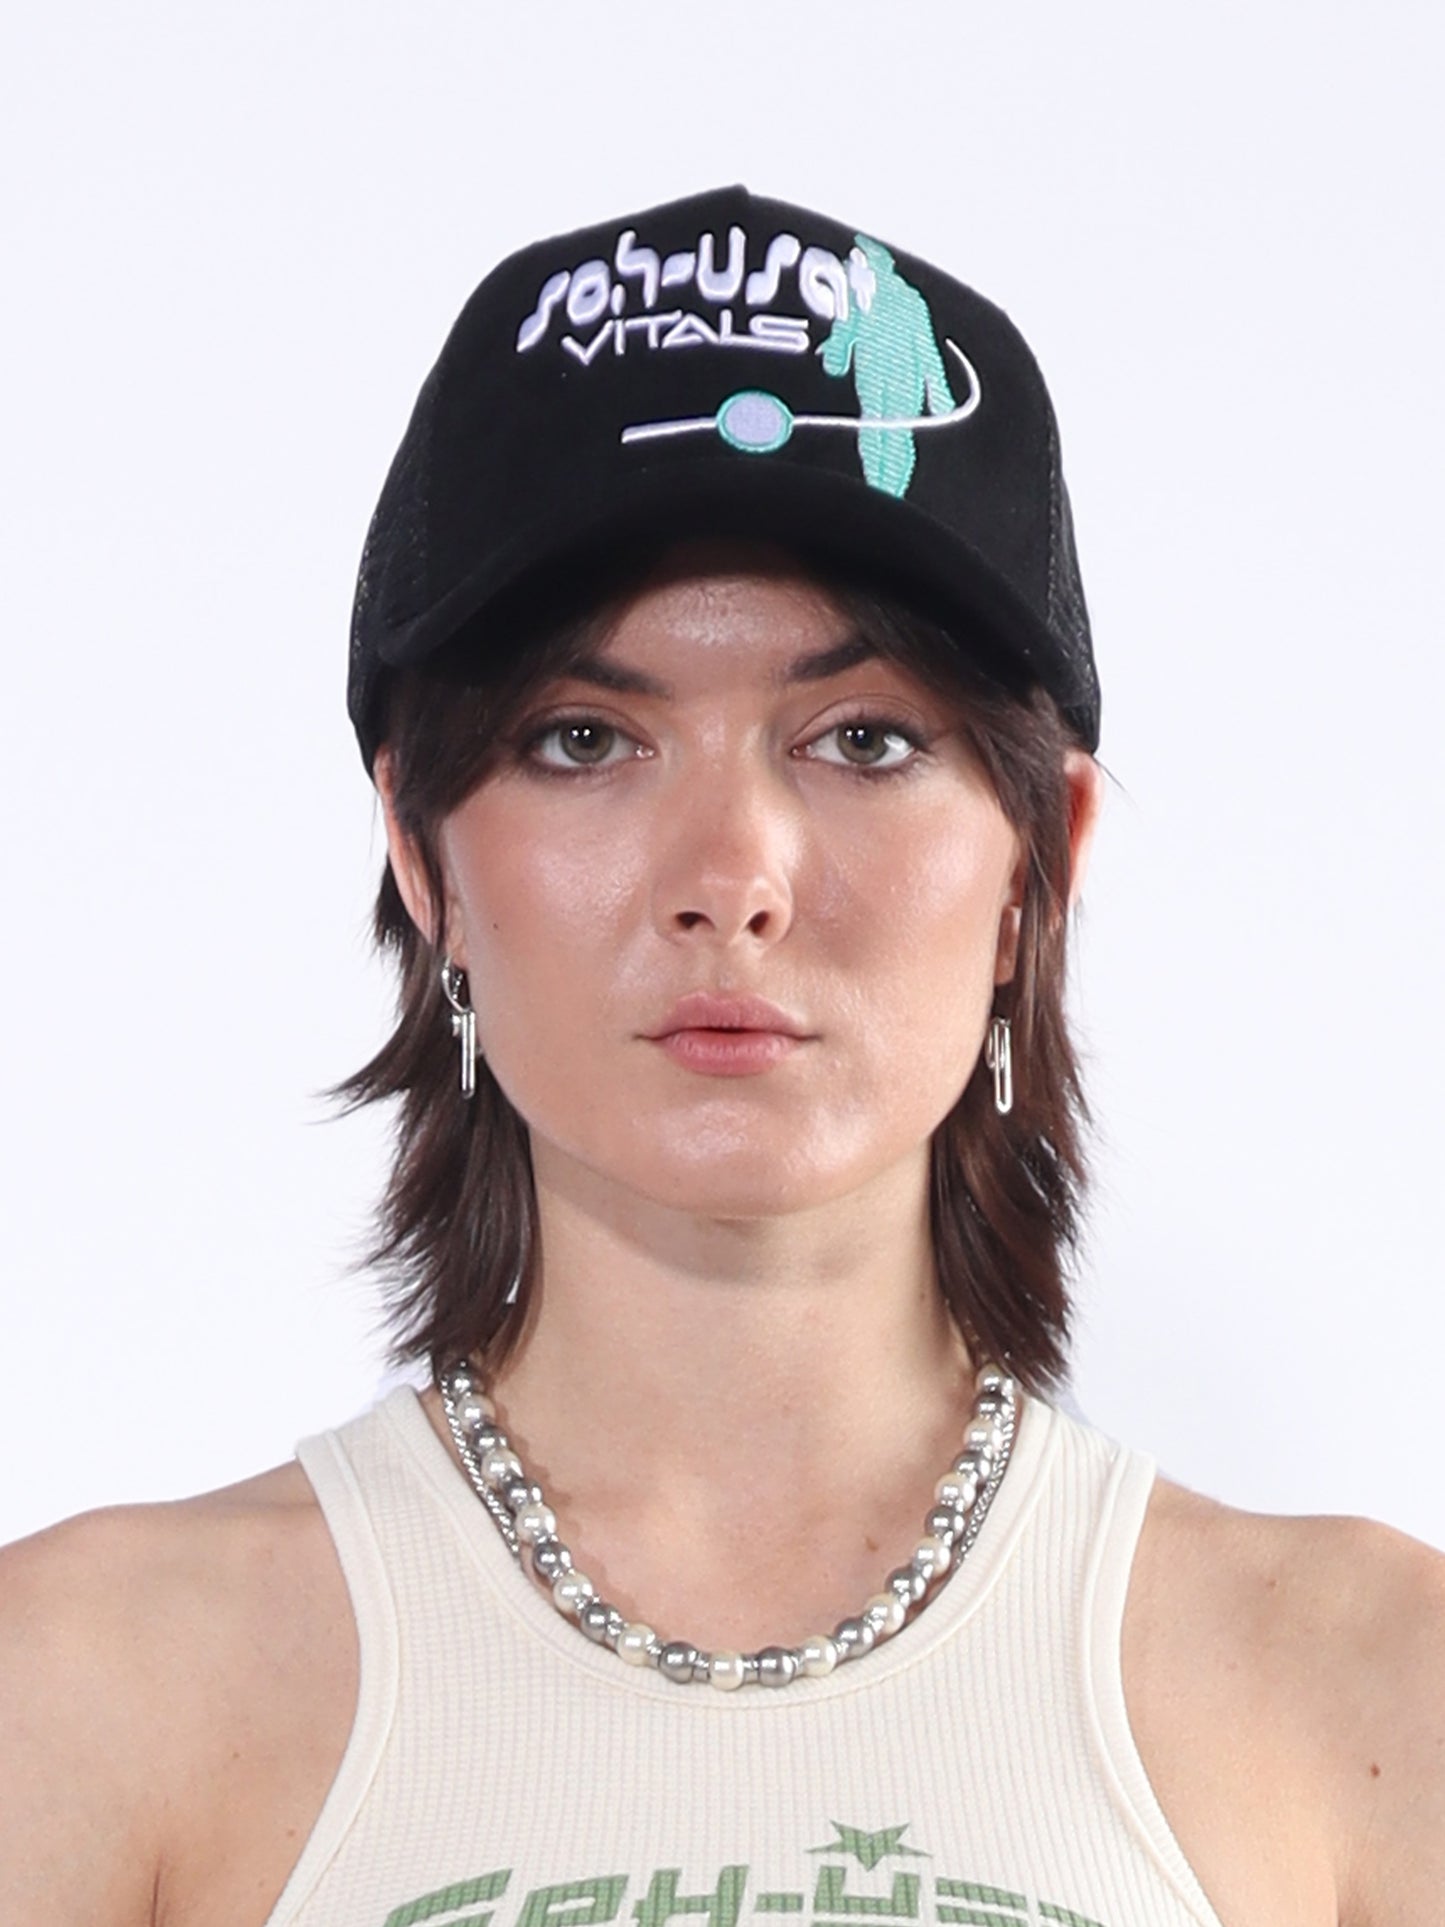 VITALS - Embroidered Trucker Hat